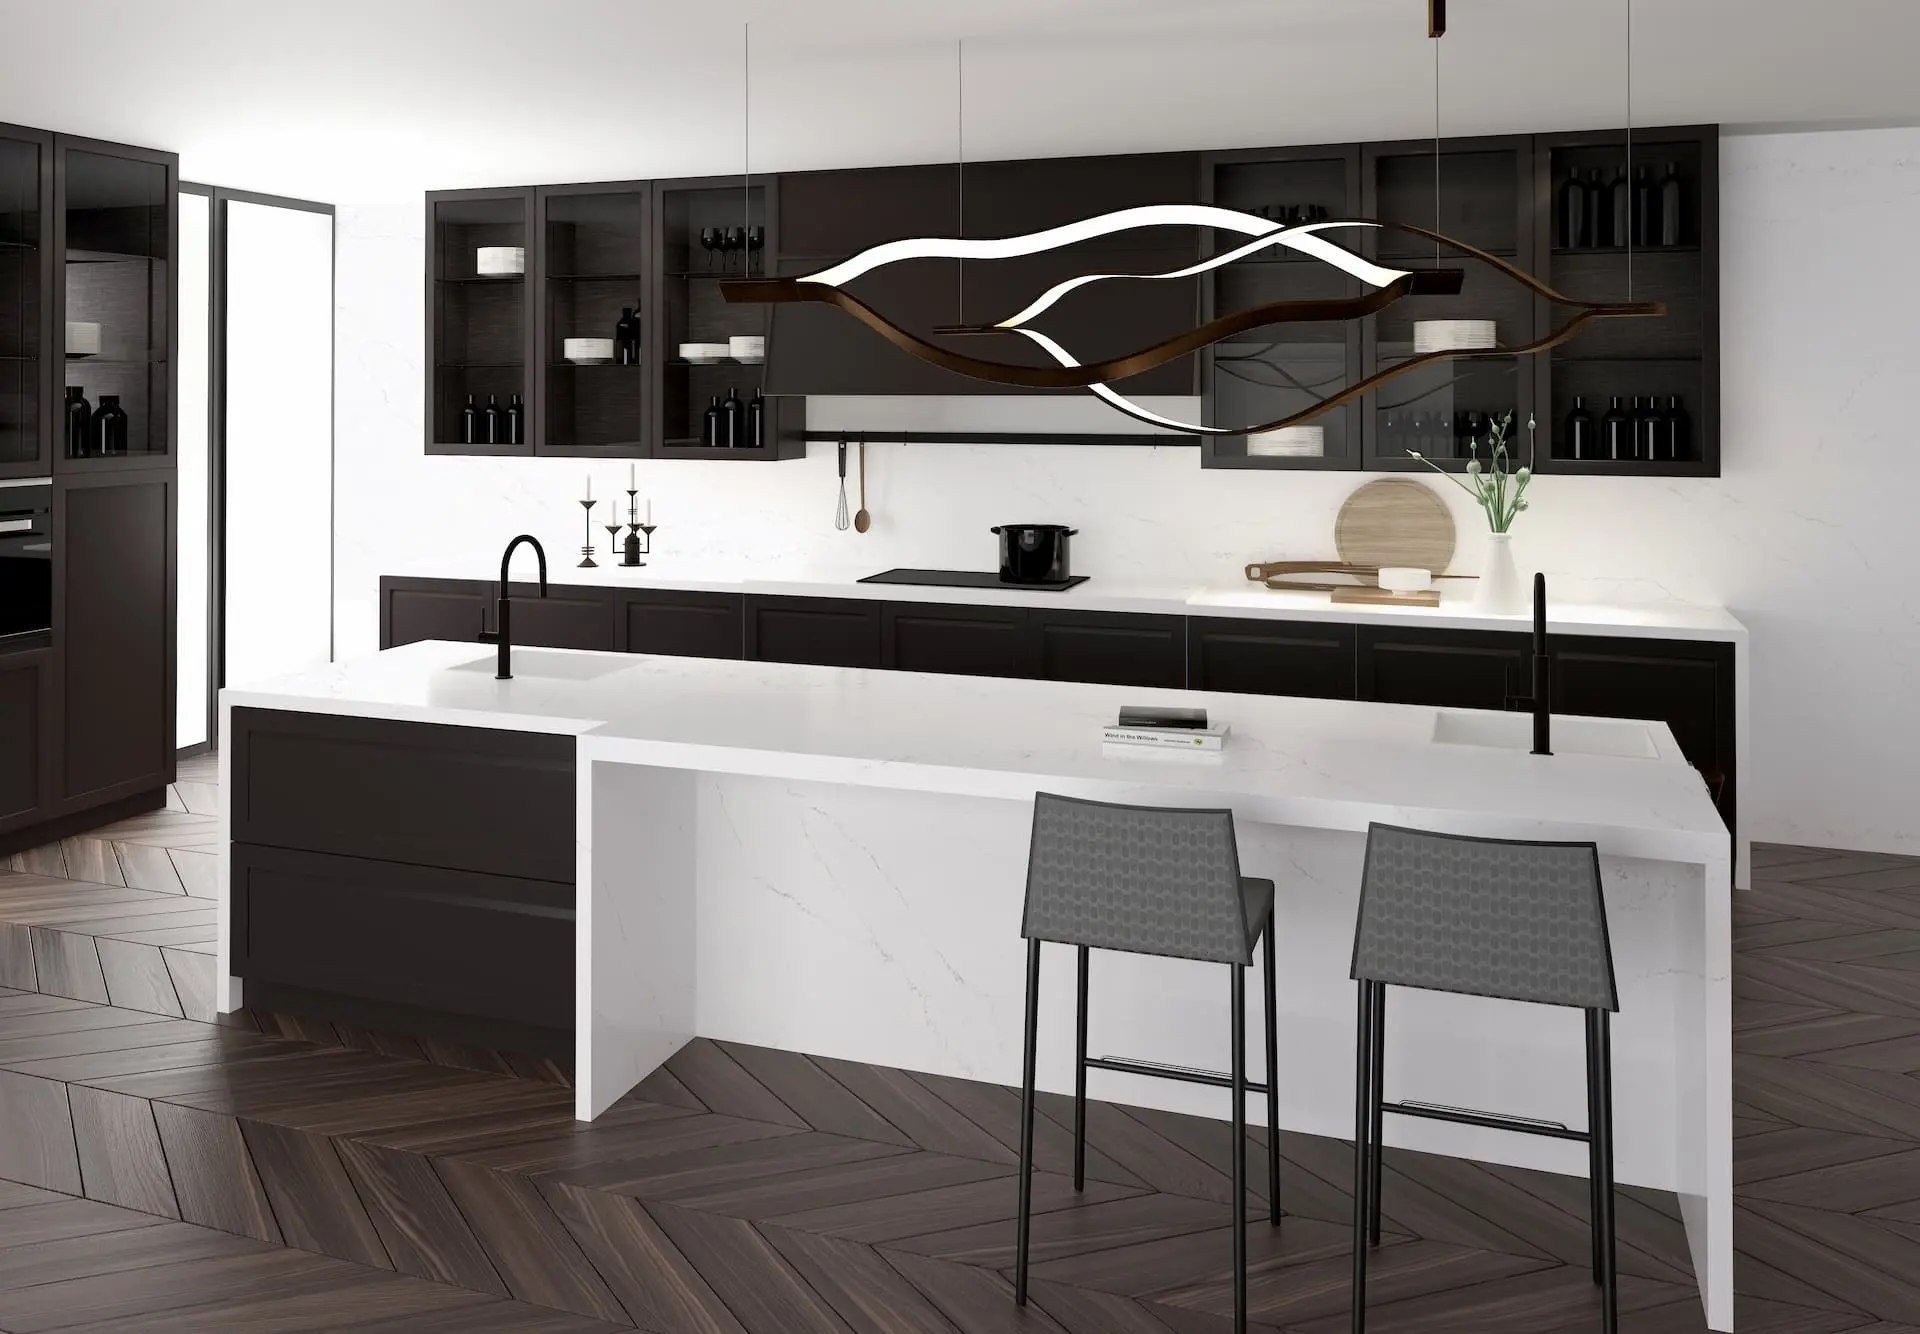 Nice kitchen interior - Francini Marbles Inc.